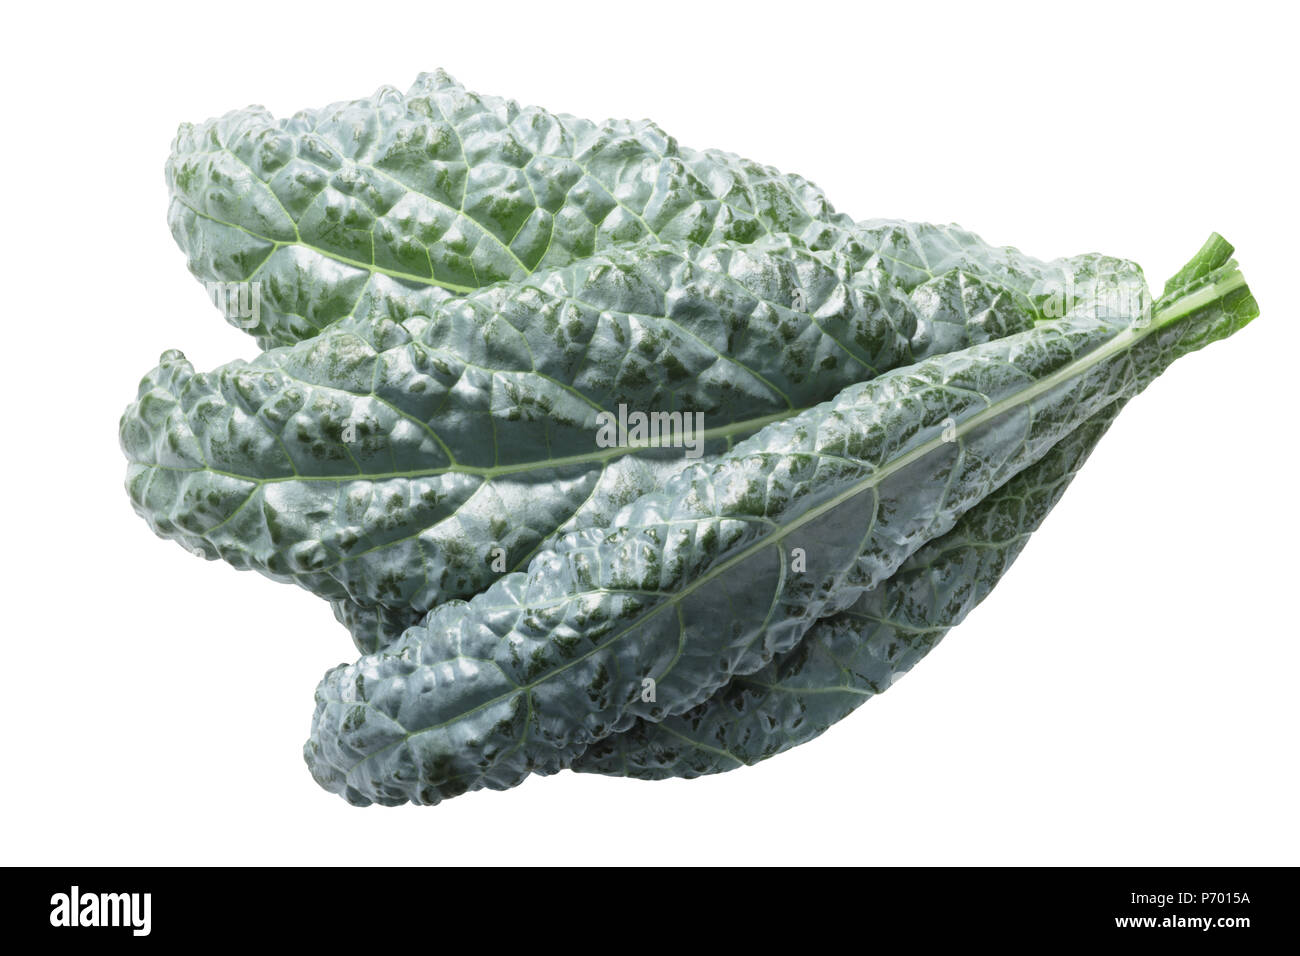 Bumpy leaf Cabbage or Kale, Nero di Toscana (Brassica oleracea) Stock Photo